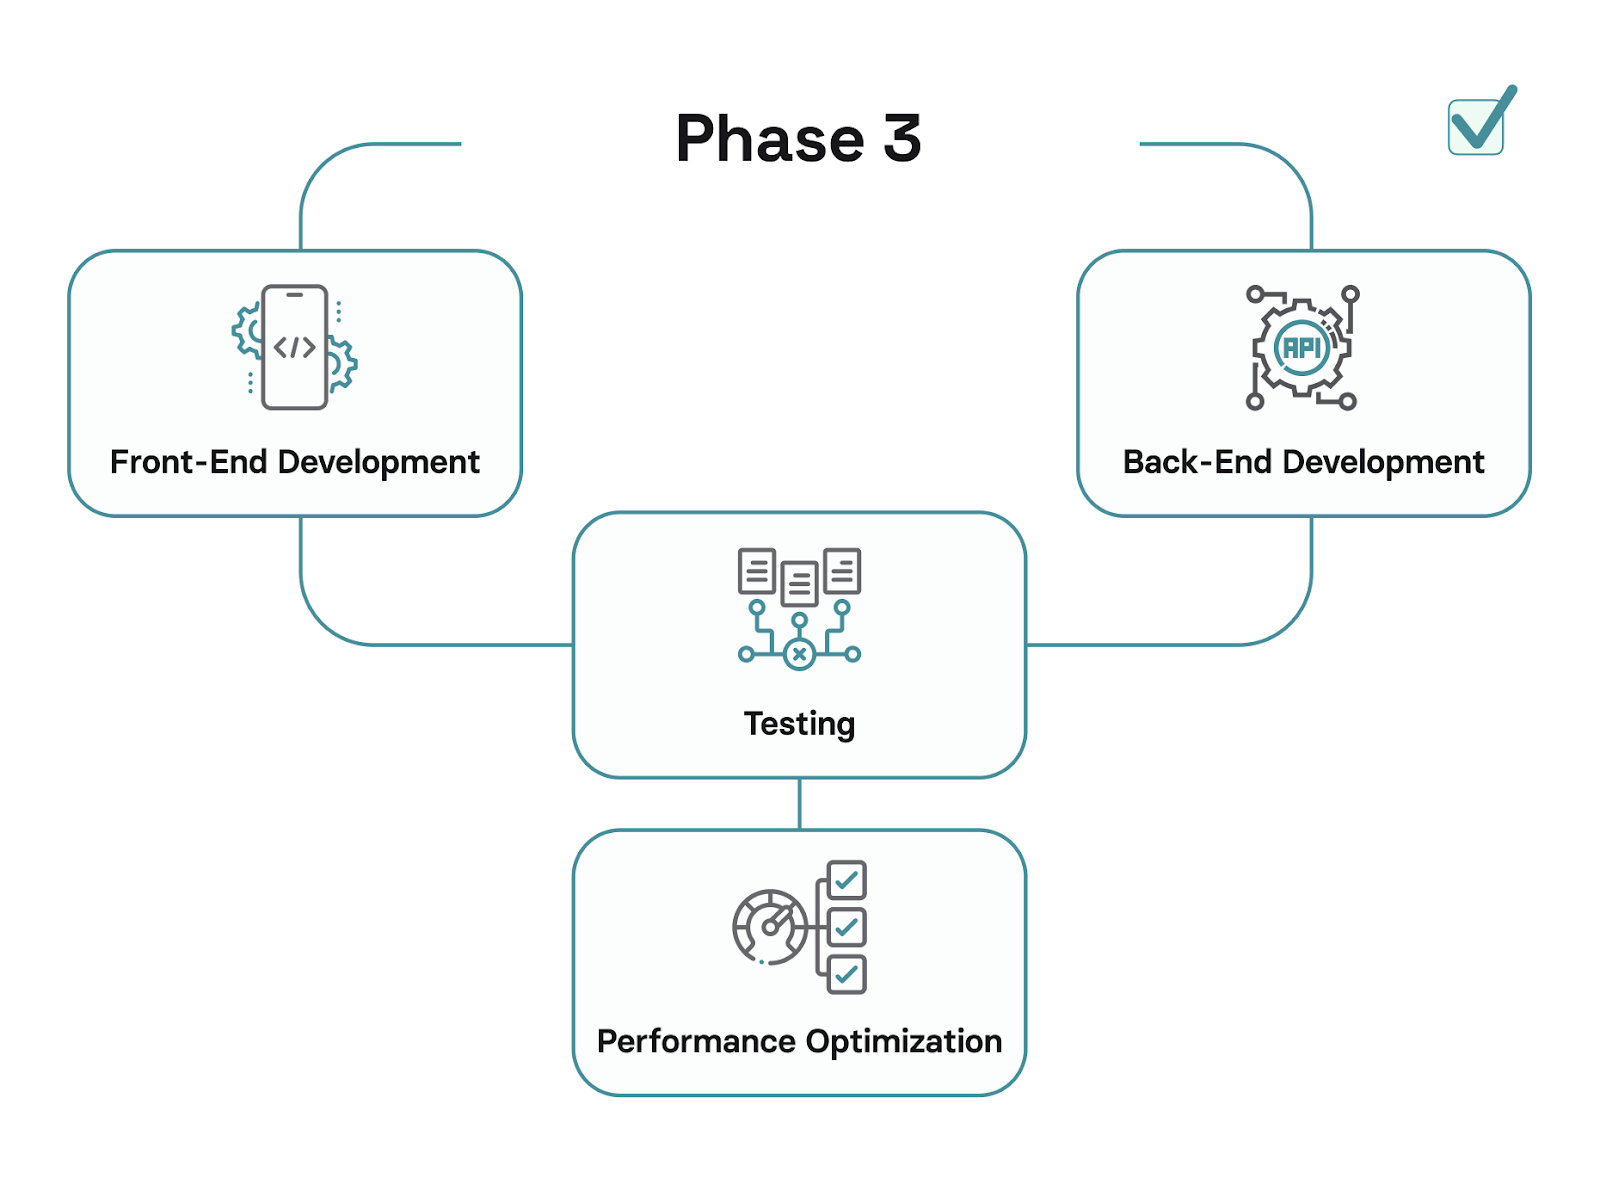 Mobile app redesign checklist. 3) Development phase

